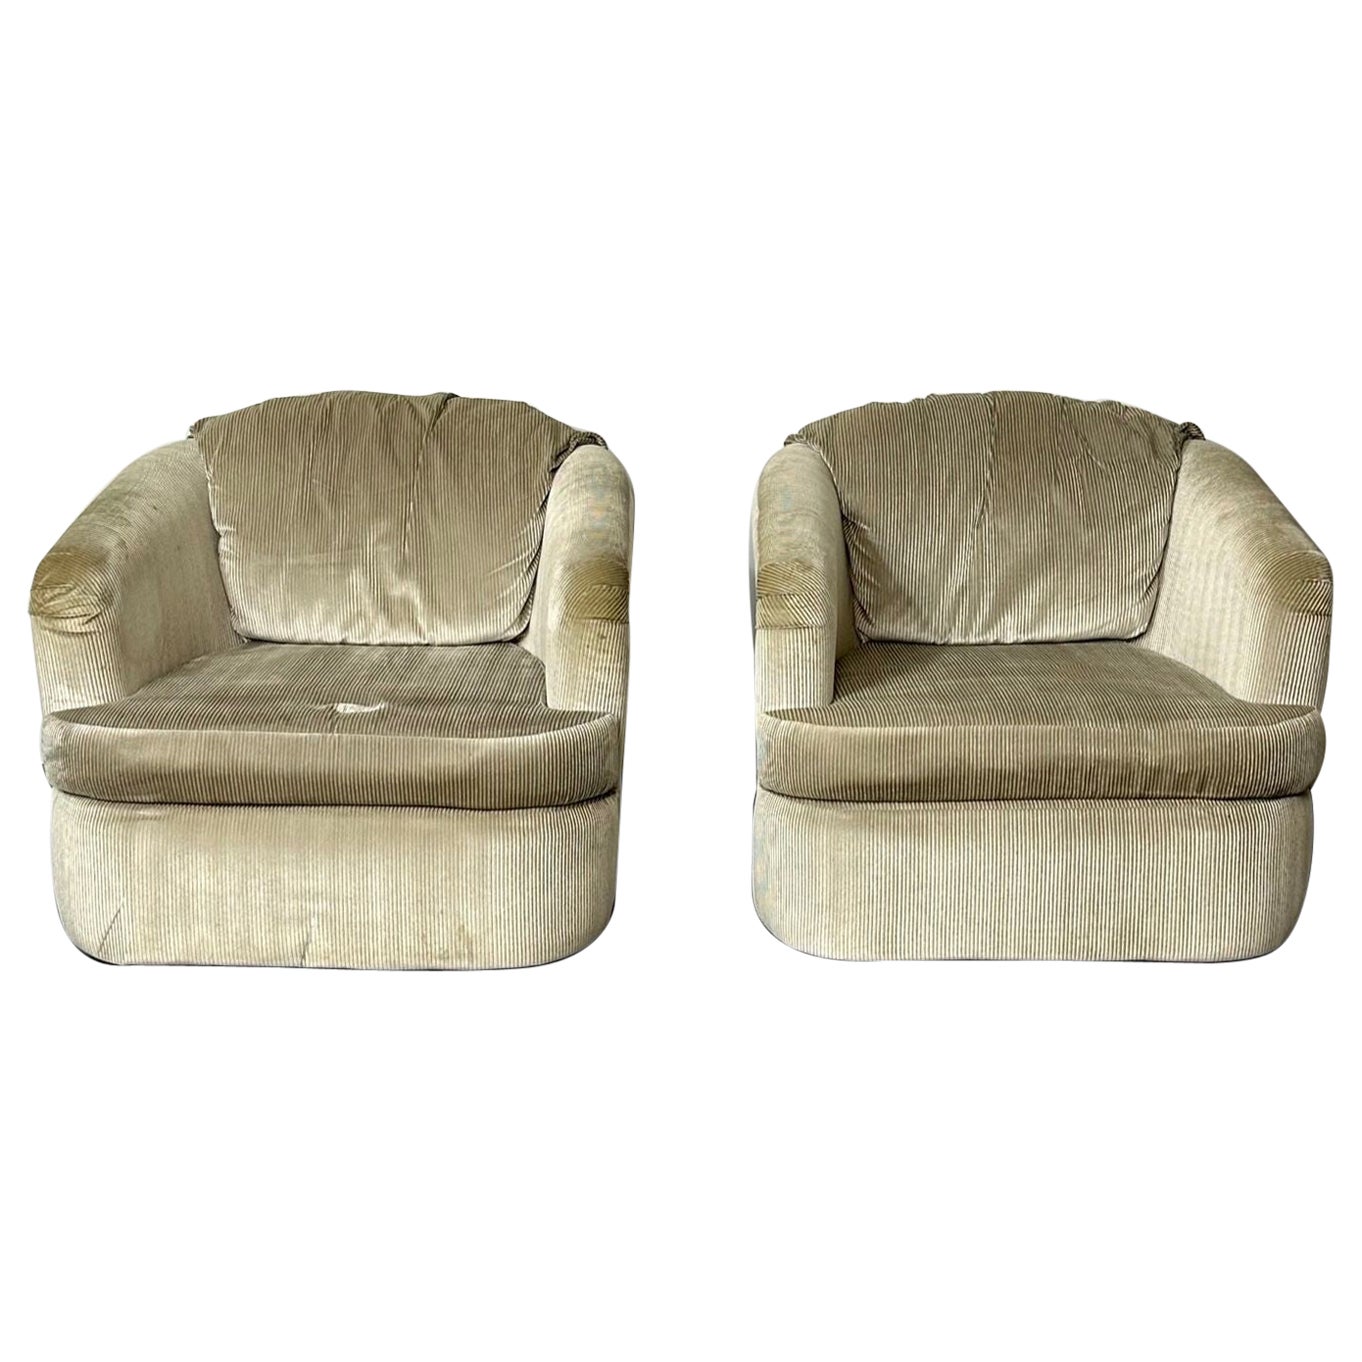 Pair of Mid-Century Modern Swivel Chairs, Milo Baughman Style, Sturdy